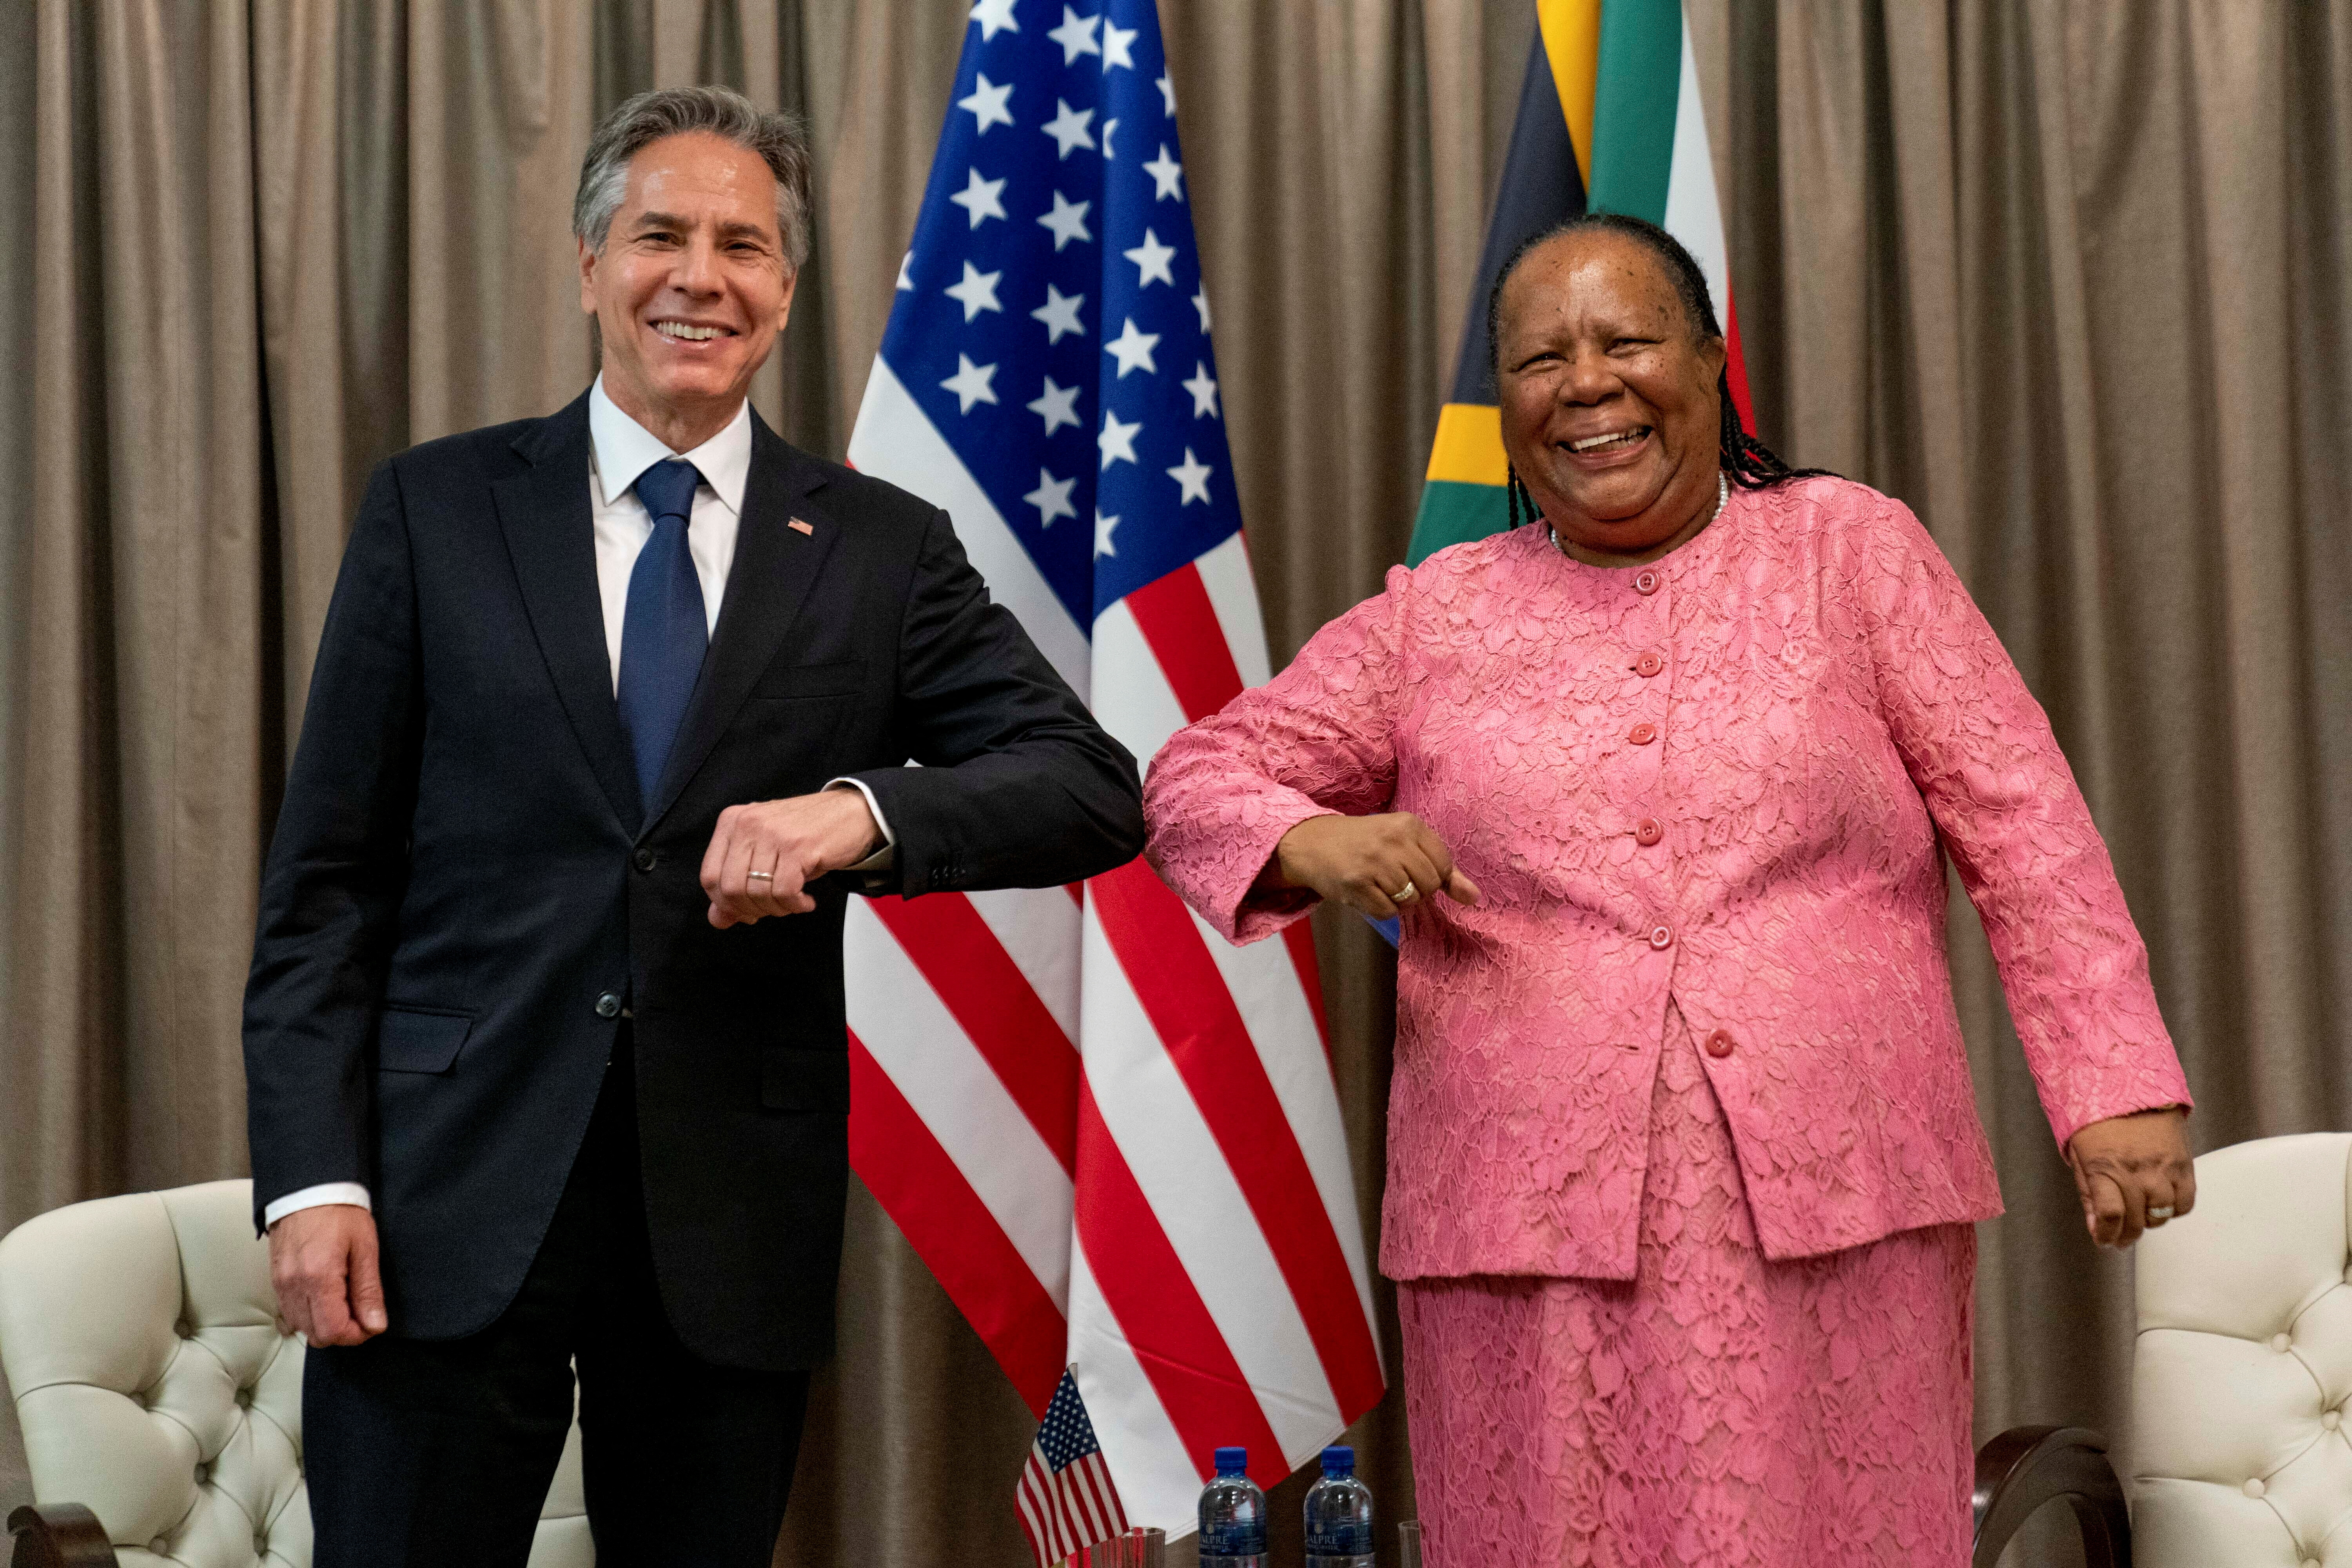 U.S. Secretary of State Antony Blinken visits South Africa